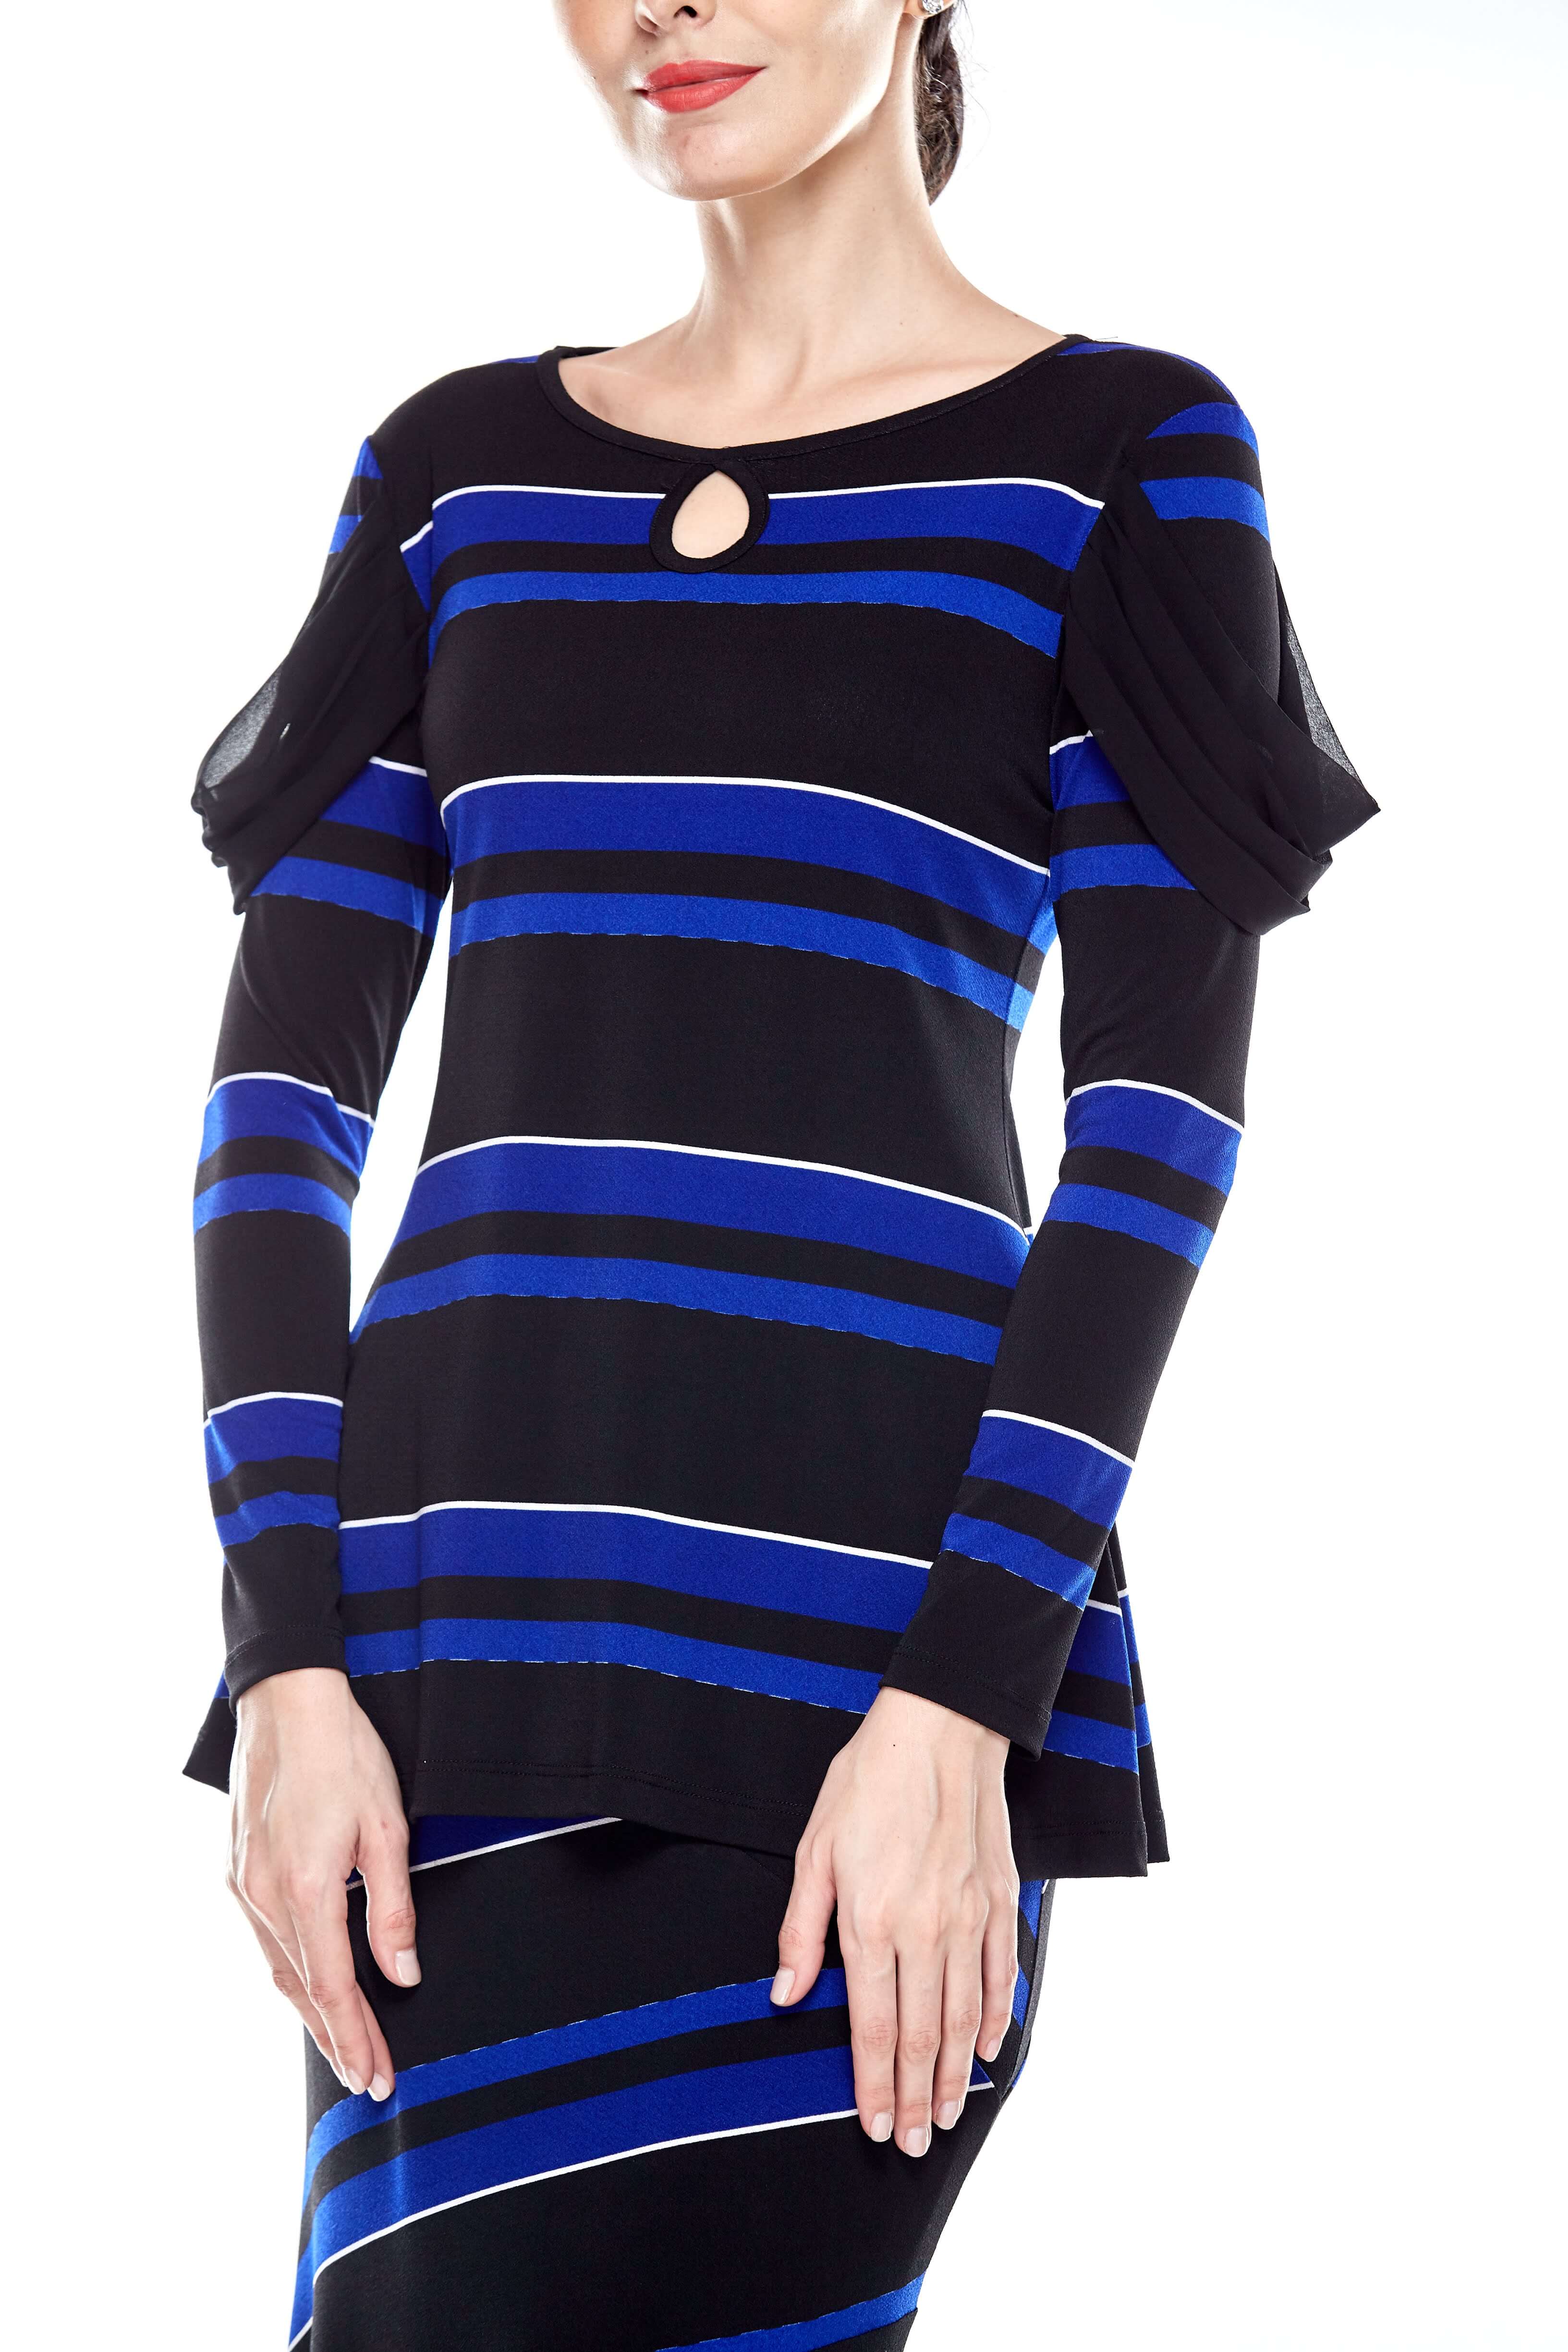 Blue-Black Striped Drape Chiffon Sleeve Top (3)